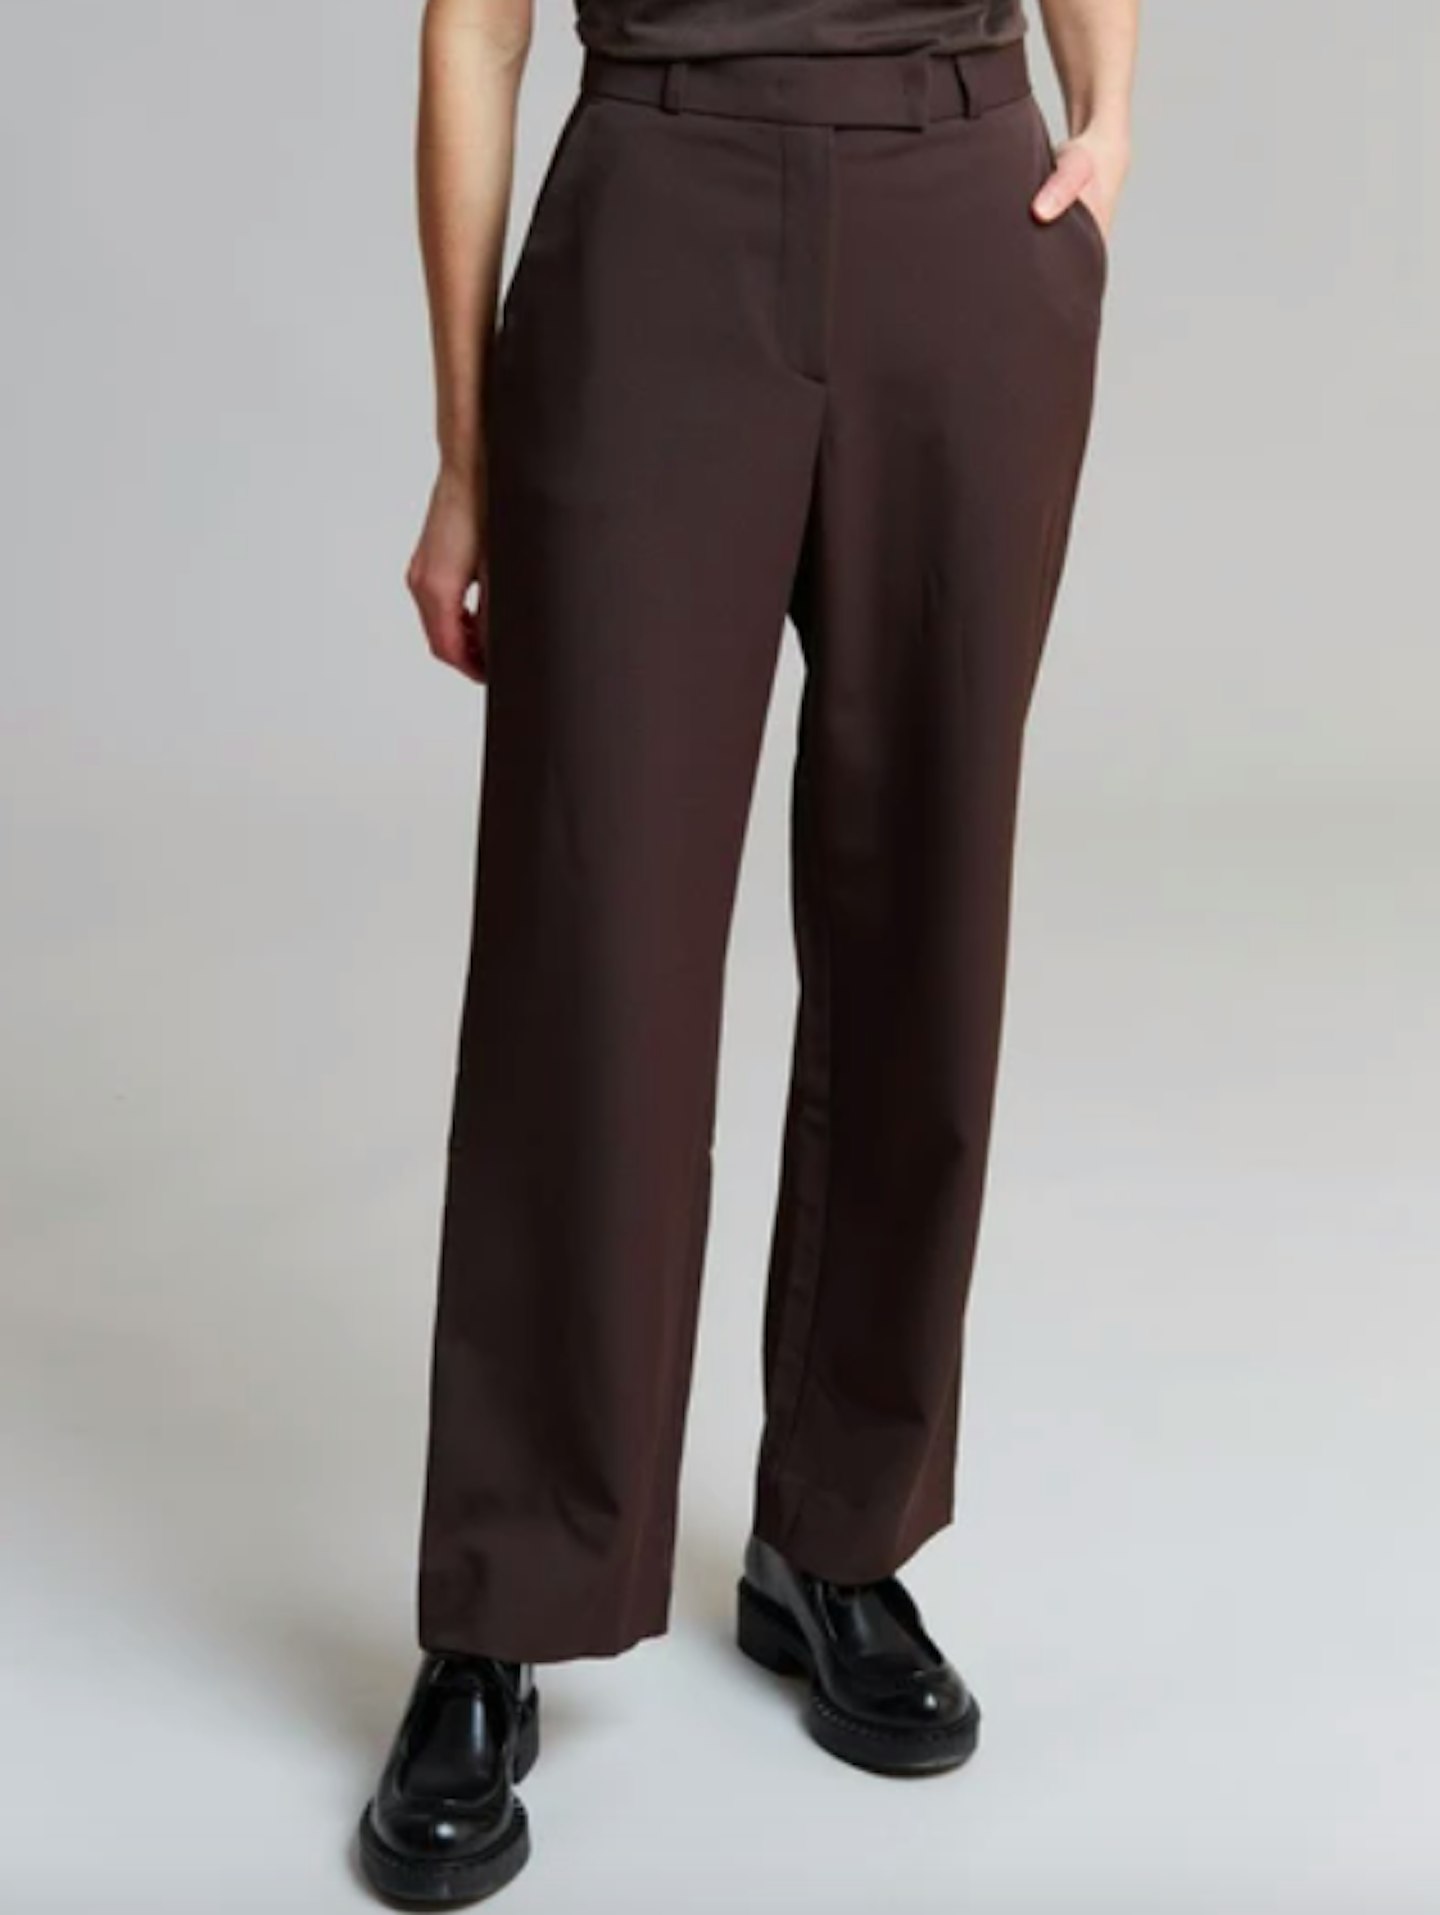 The Frankie Shop, Gabardine Full-Length Suit Pants In Java, £85